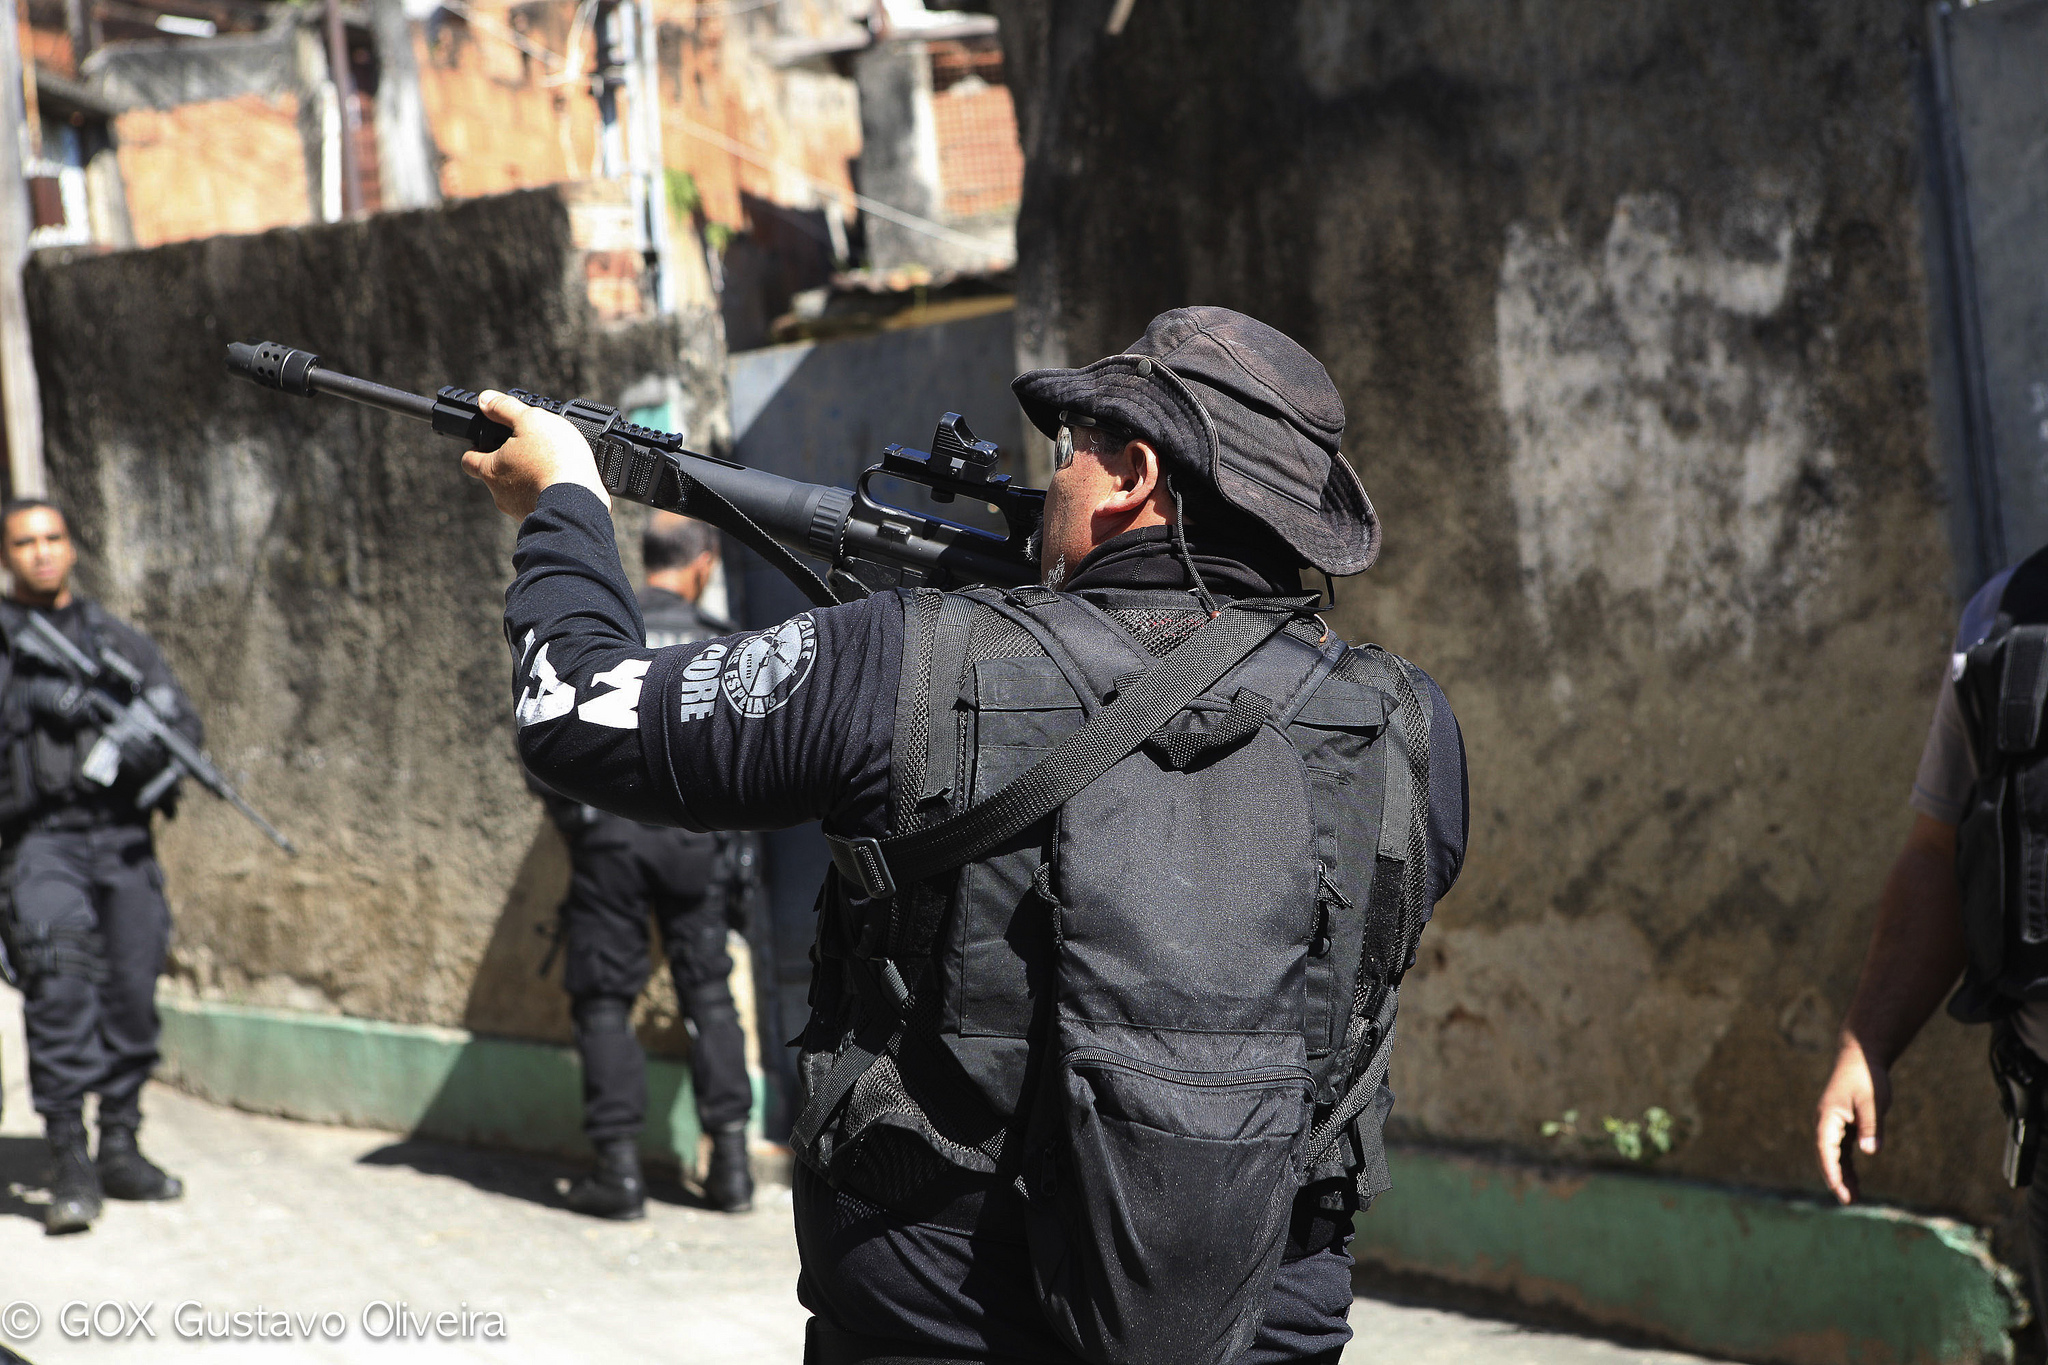 Factcheck: ‘Politieagenten van Rio de Janeiro doden vaker en worden vaker gedood’